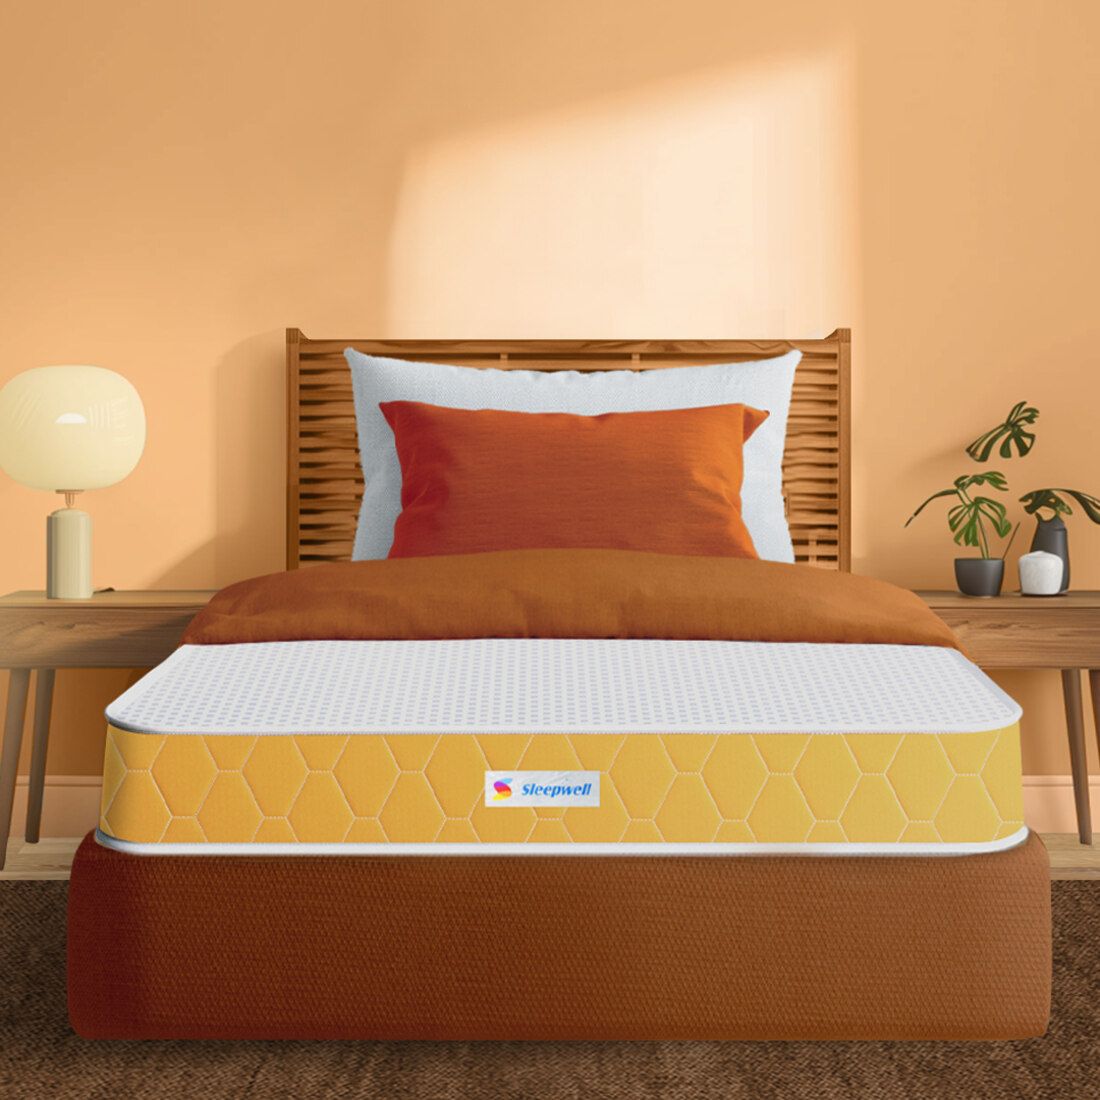 Sleepwell Dual Mattress | Reversible | High Density (HD) Foam | 5-inch Single Bed Size,?Medium Soft & Hard (Orange, 84x42x5 )